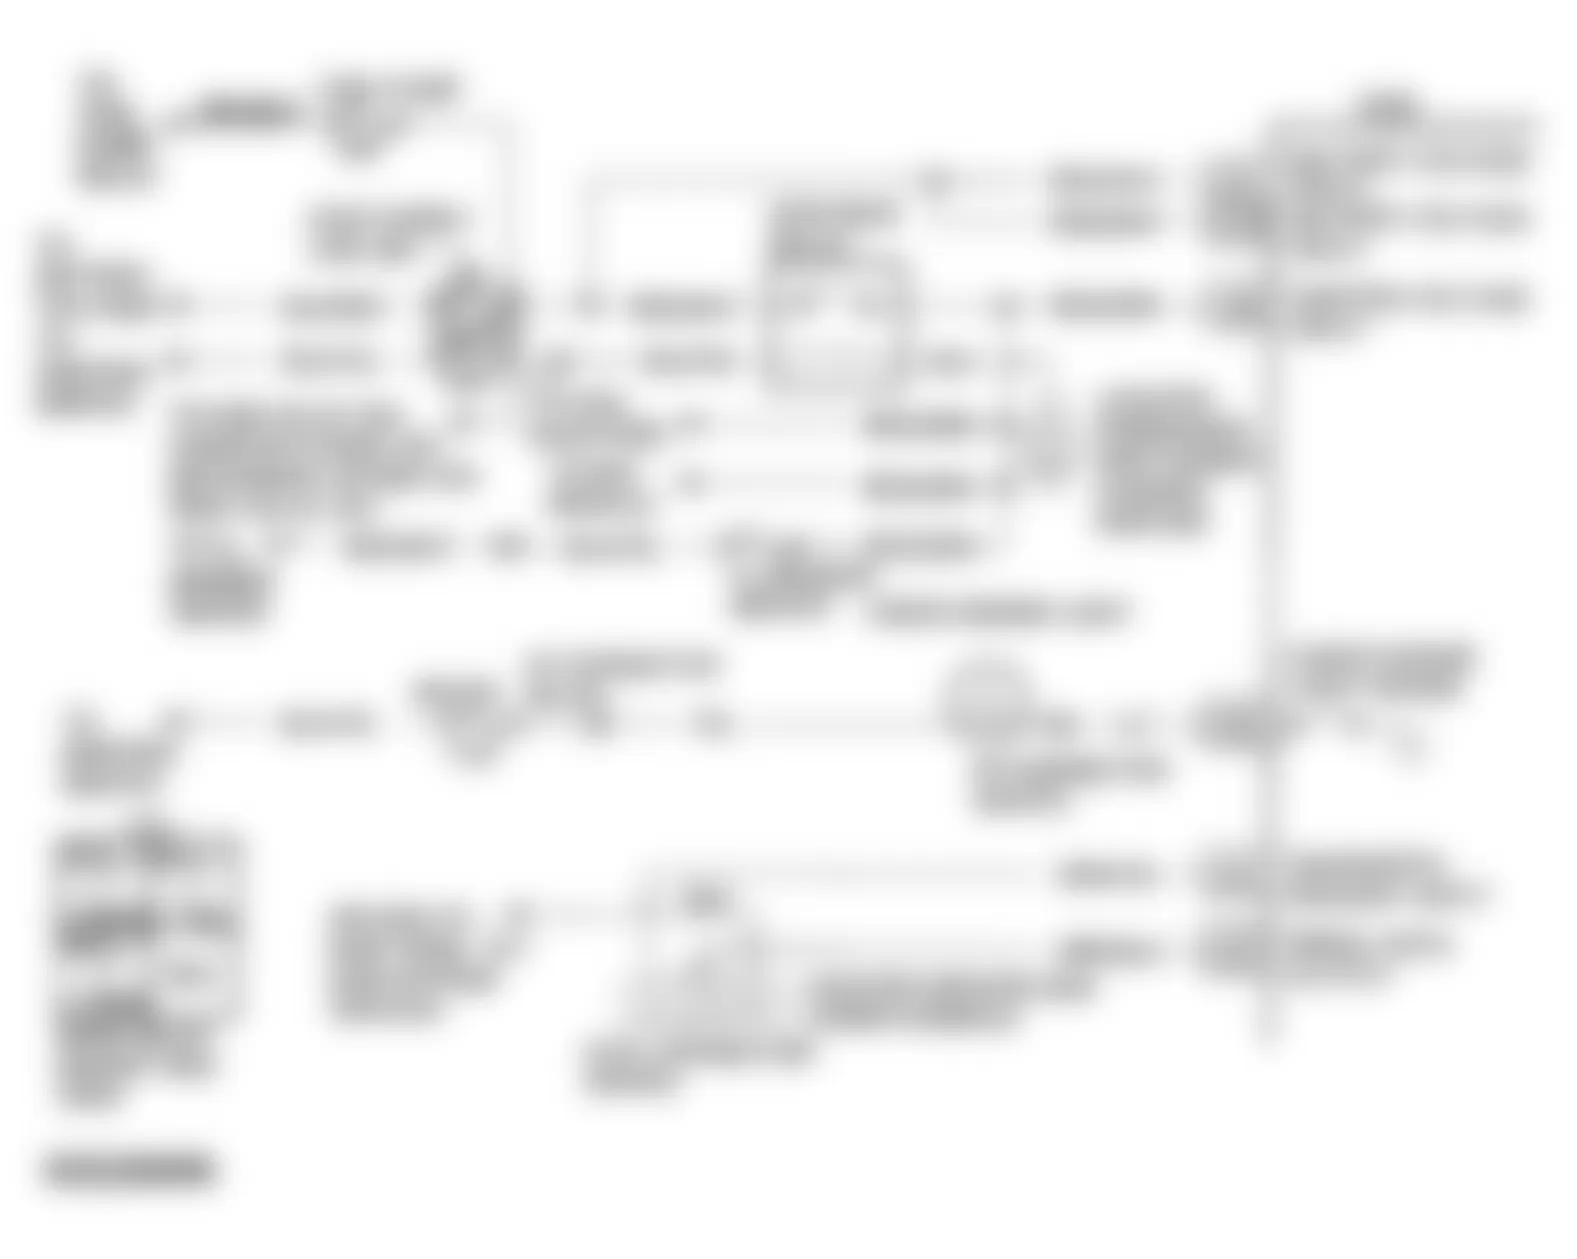 Isuzu Trooper LS 1992 - Component Locations -  Chart A-2 Schematic - No ALDL Data/No Code 12 (Check Engine Light On Steady)